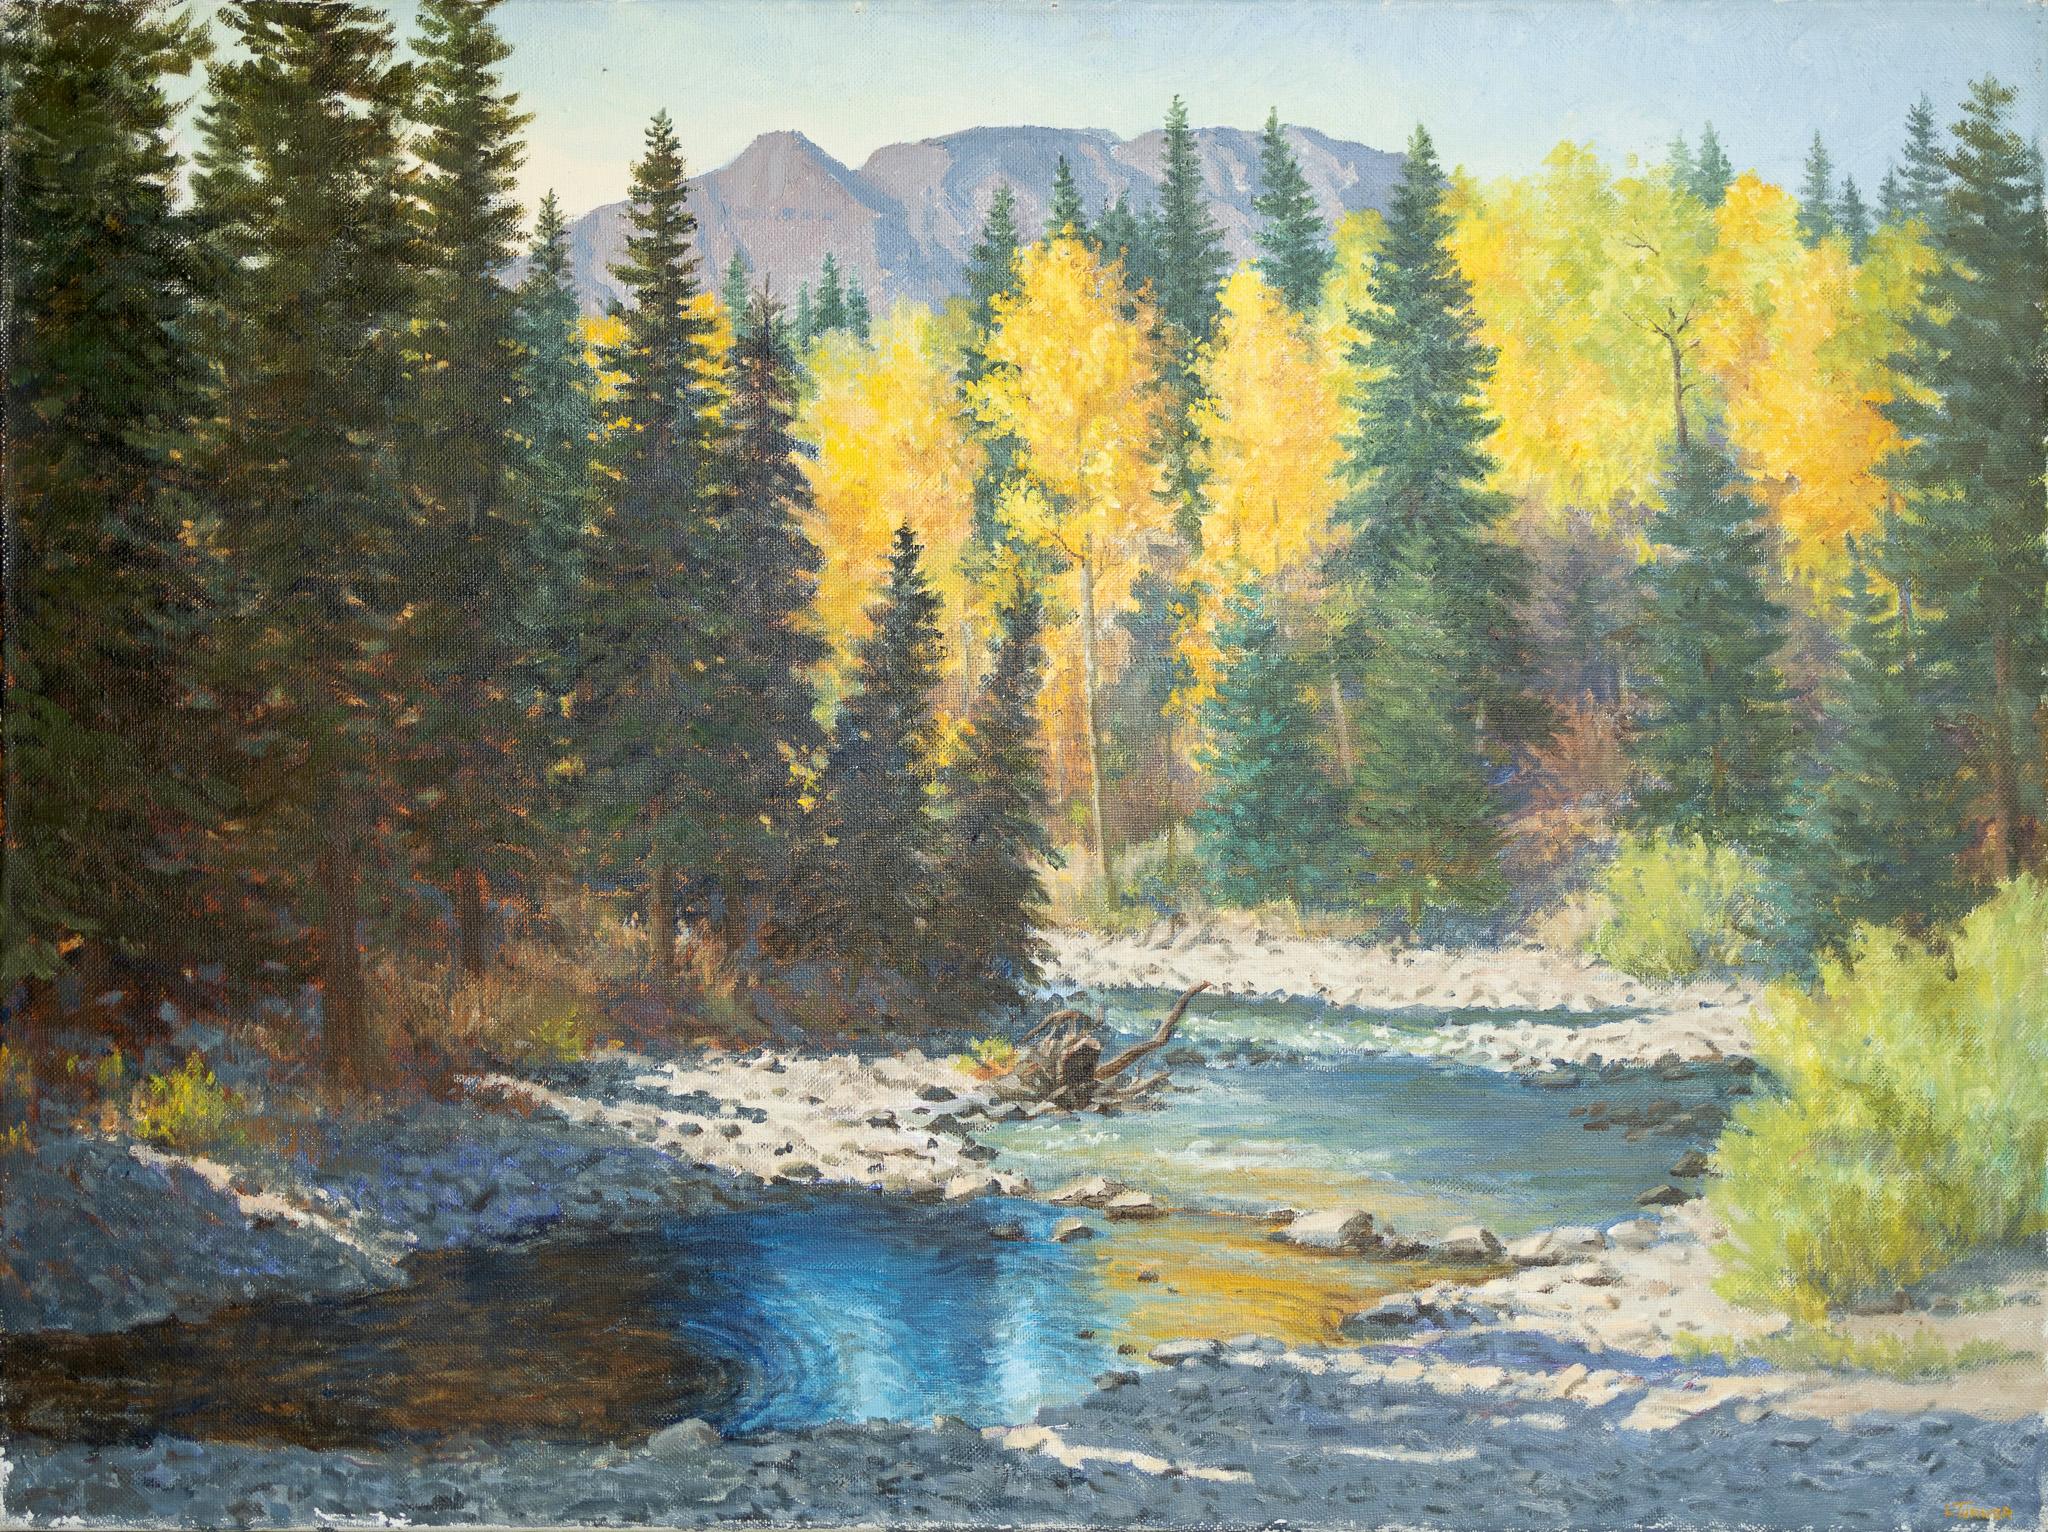 Leona Turner Landscape Painting - "Colorado Splendor" Mountain Landscape Scene with Creek and Aspen Trees